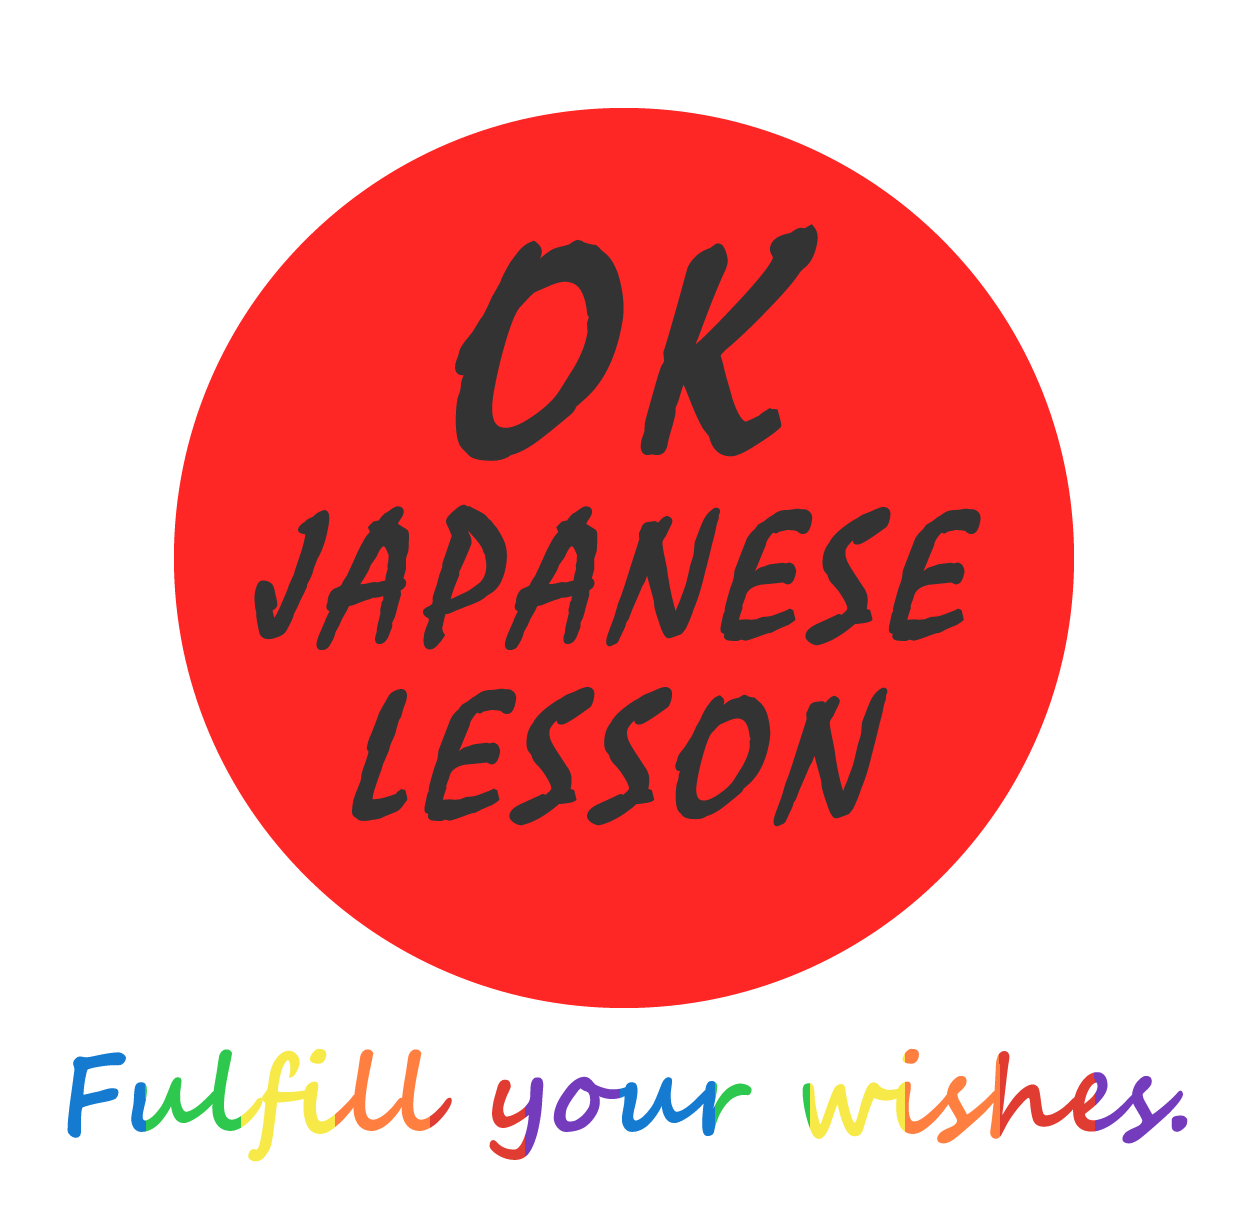 OK Japanese Lesson